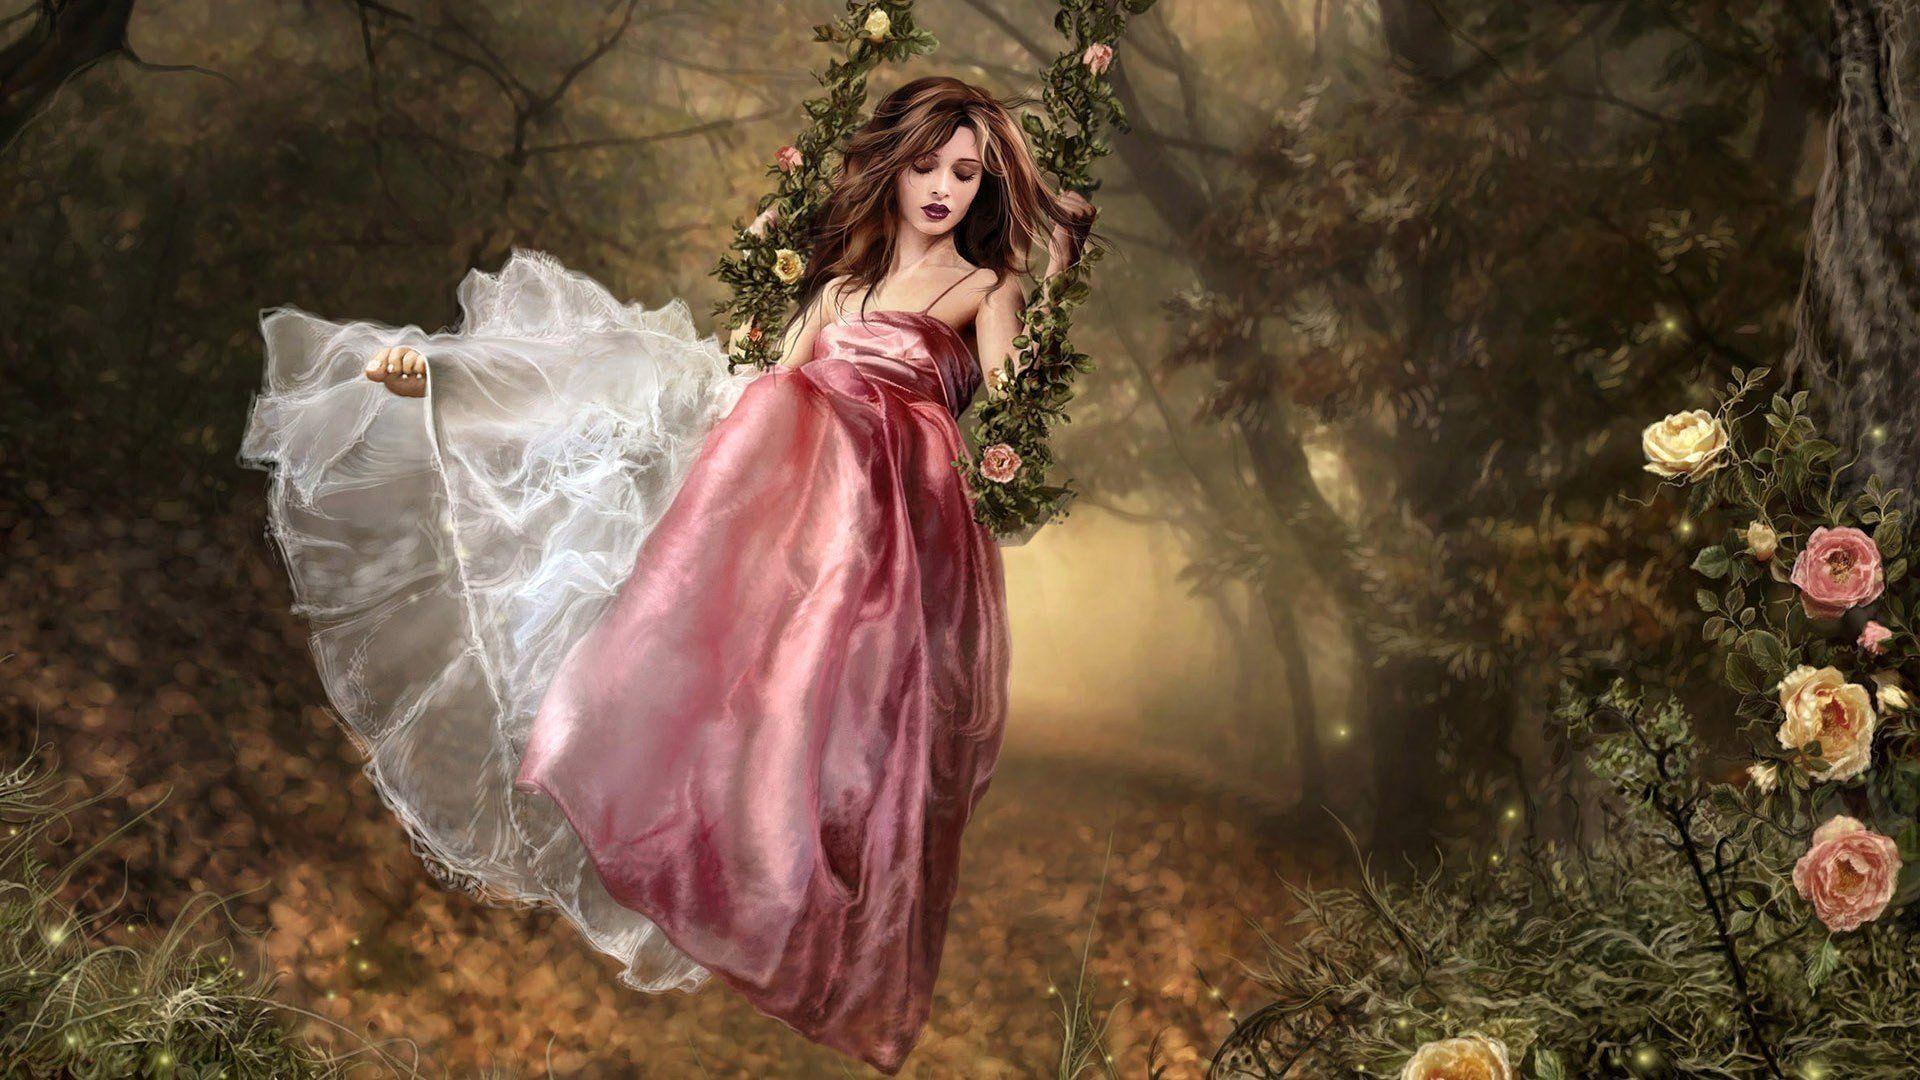 Fantasy Dream Girl Wallpaper. Fantasy women, Fairy